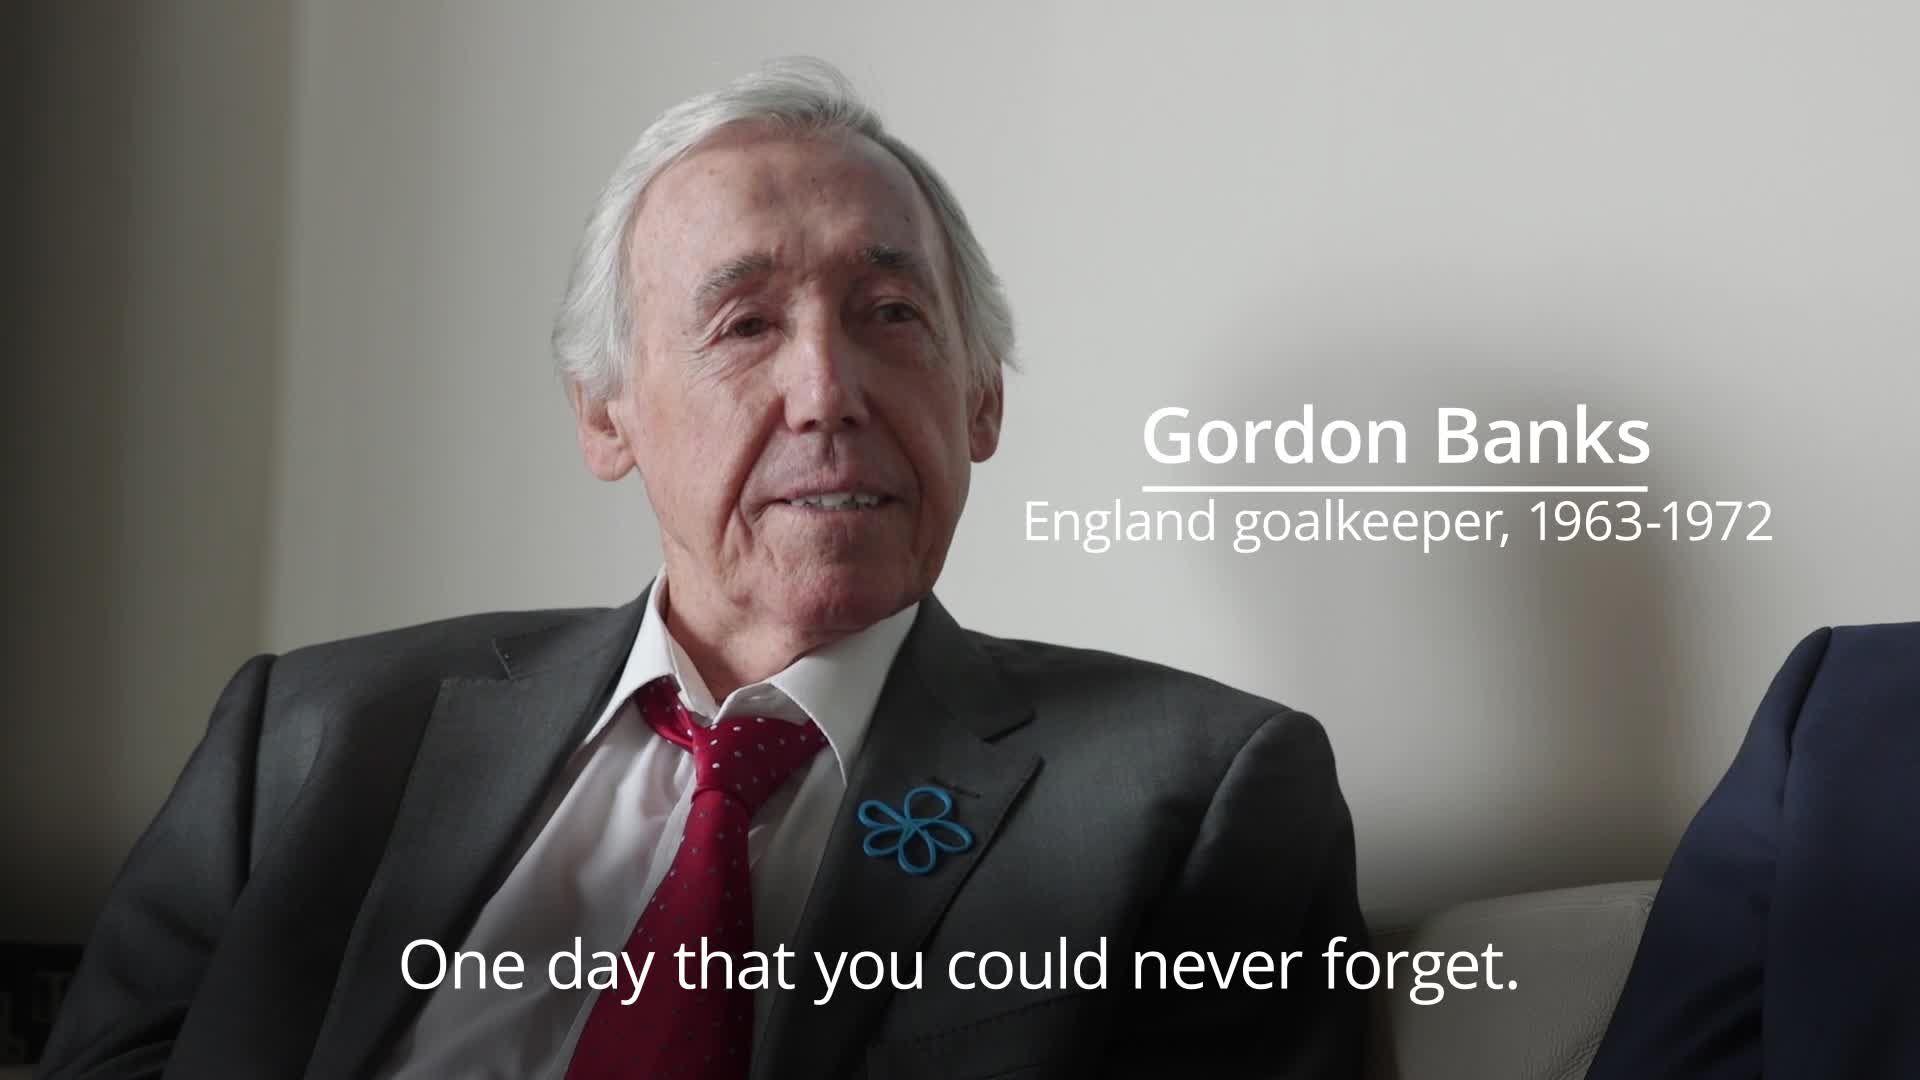 Gordon Banks recalls winning the 1966 World Cup Video